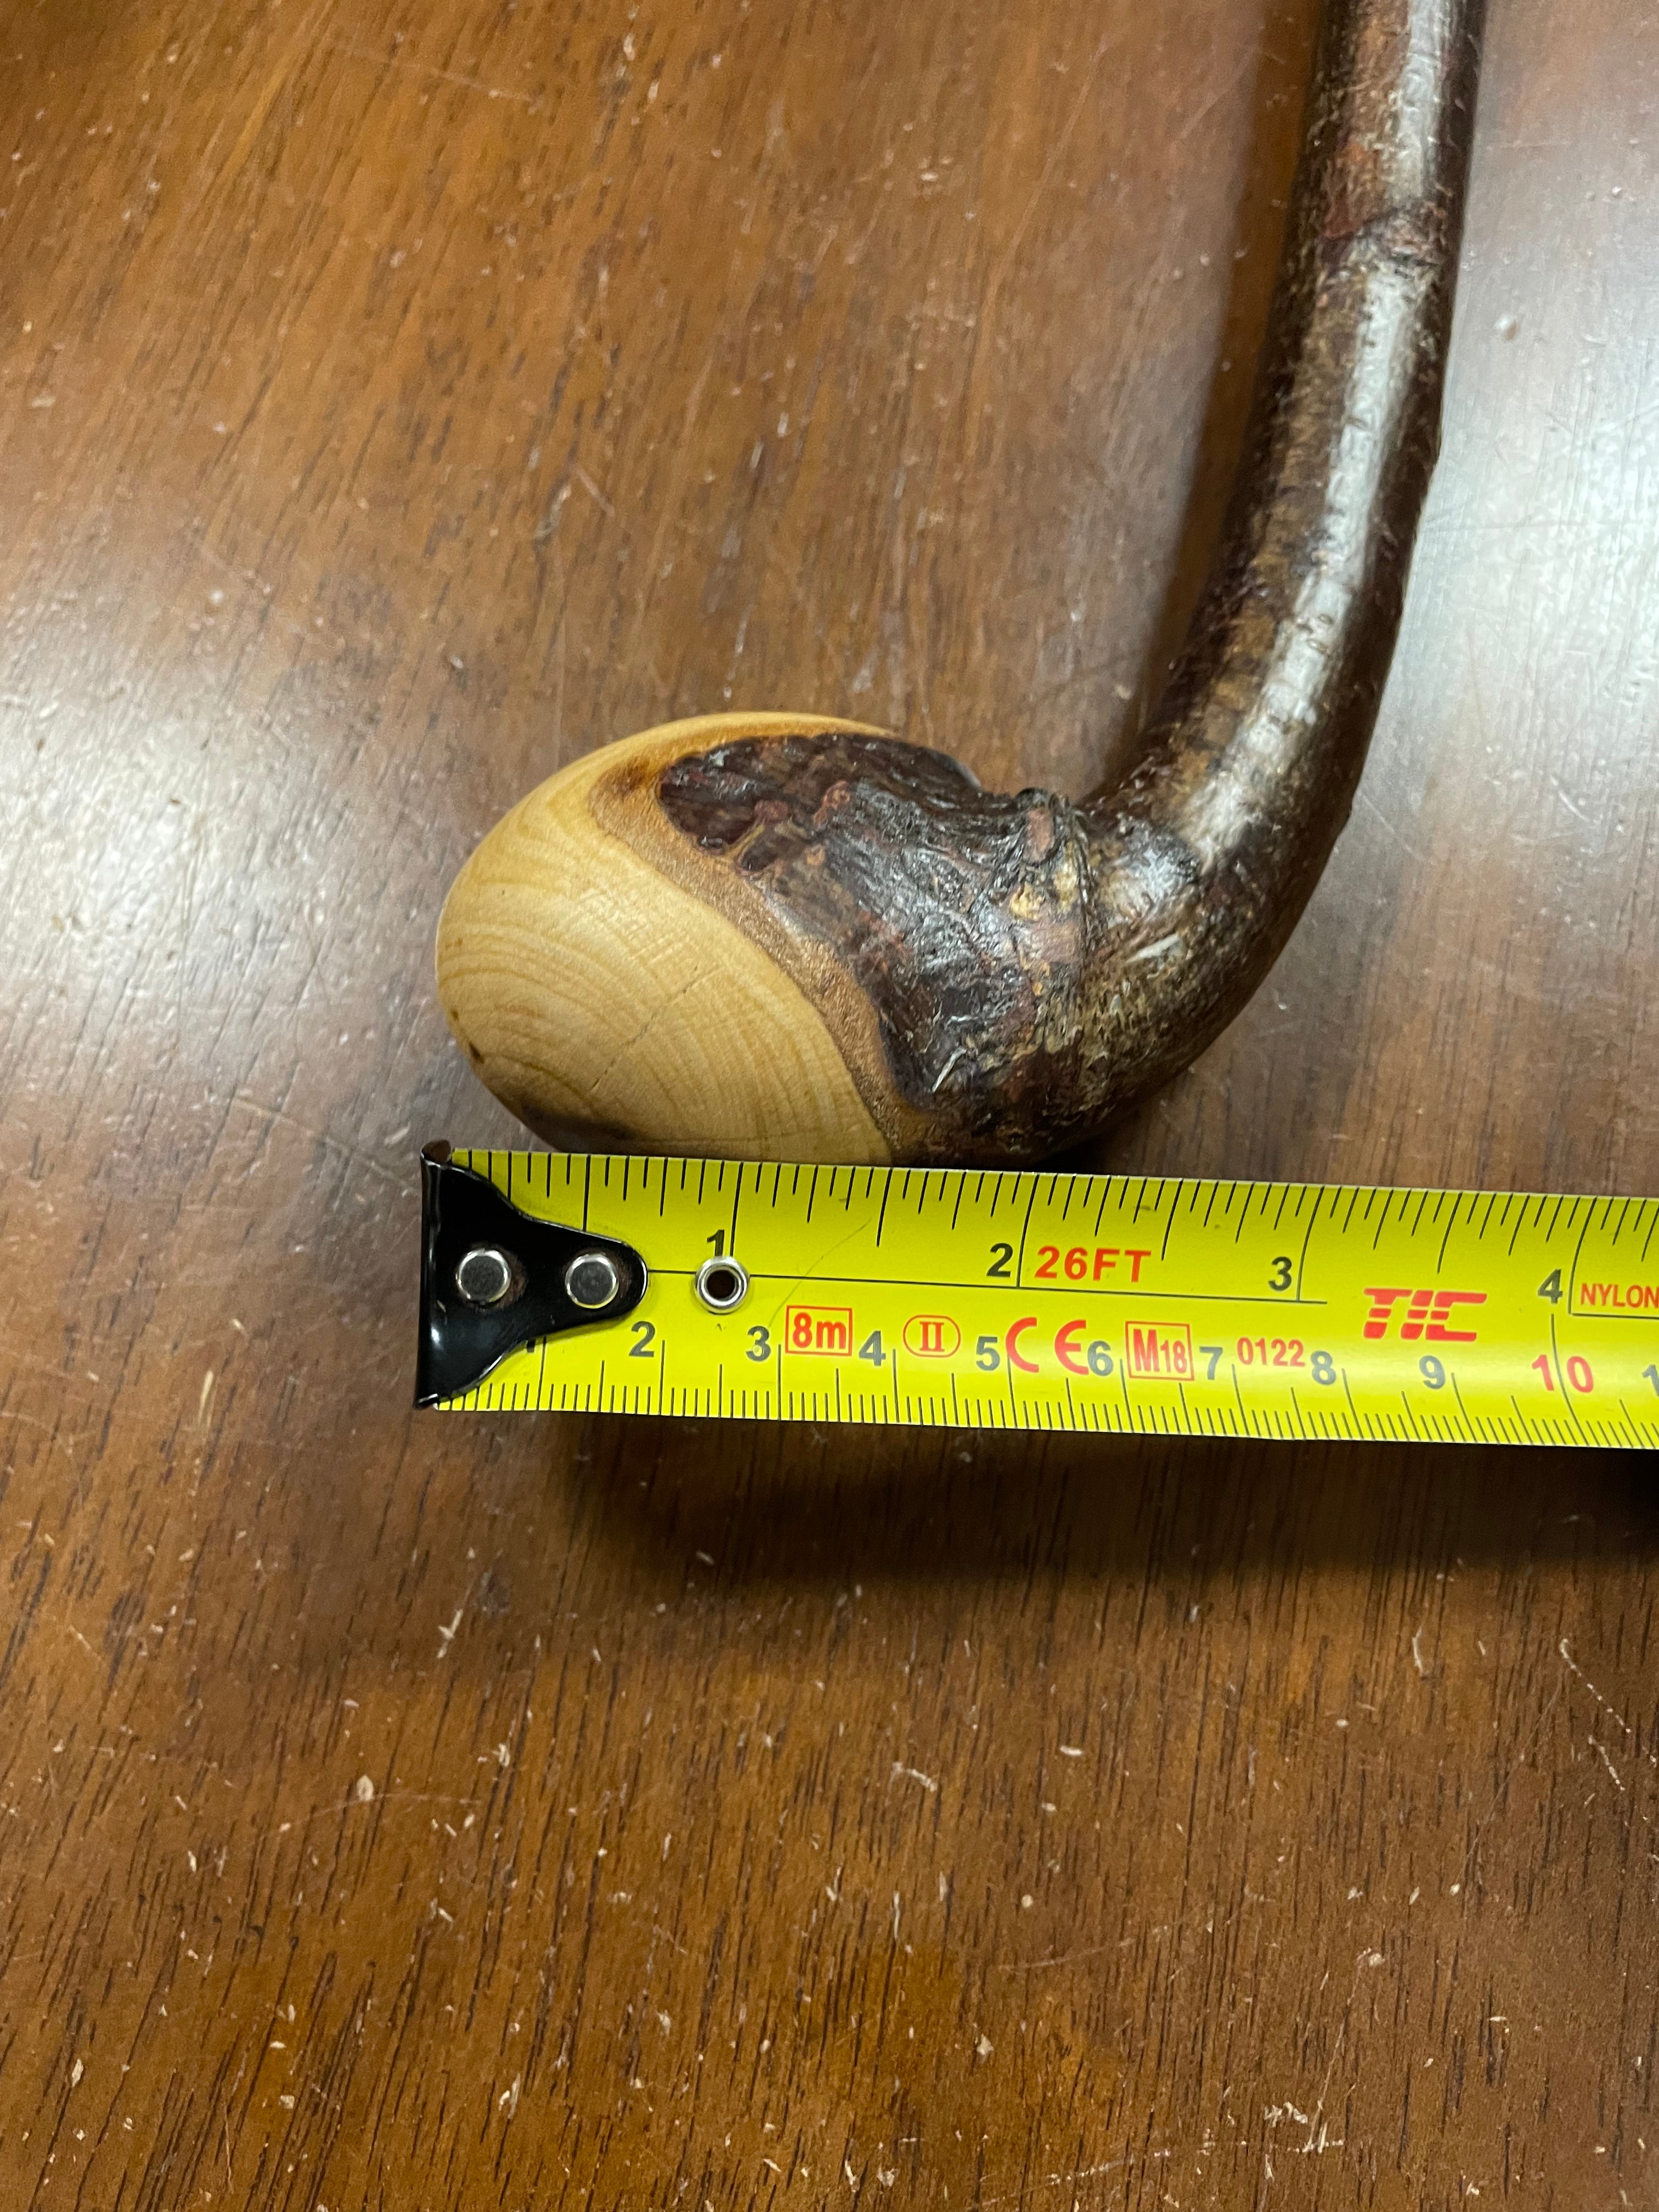 Blackthorn Shillelagh -20 inch - Handmade in Ireland